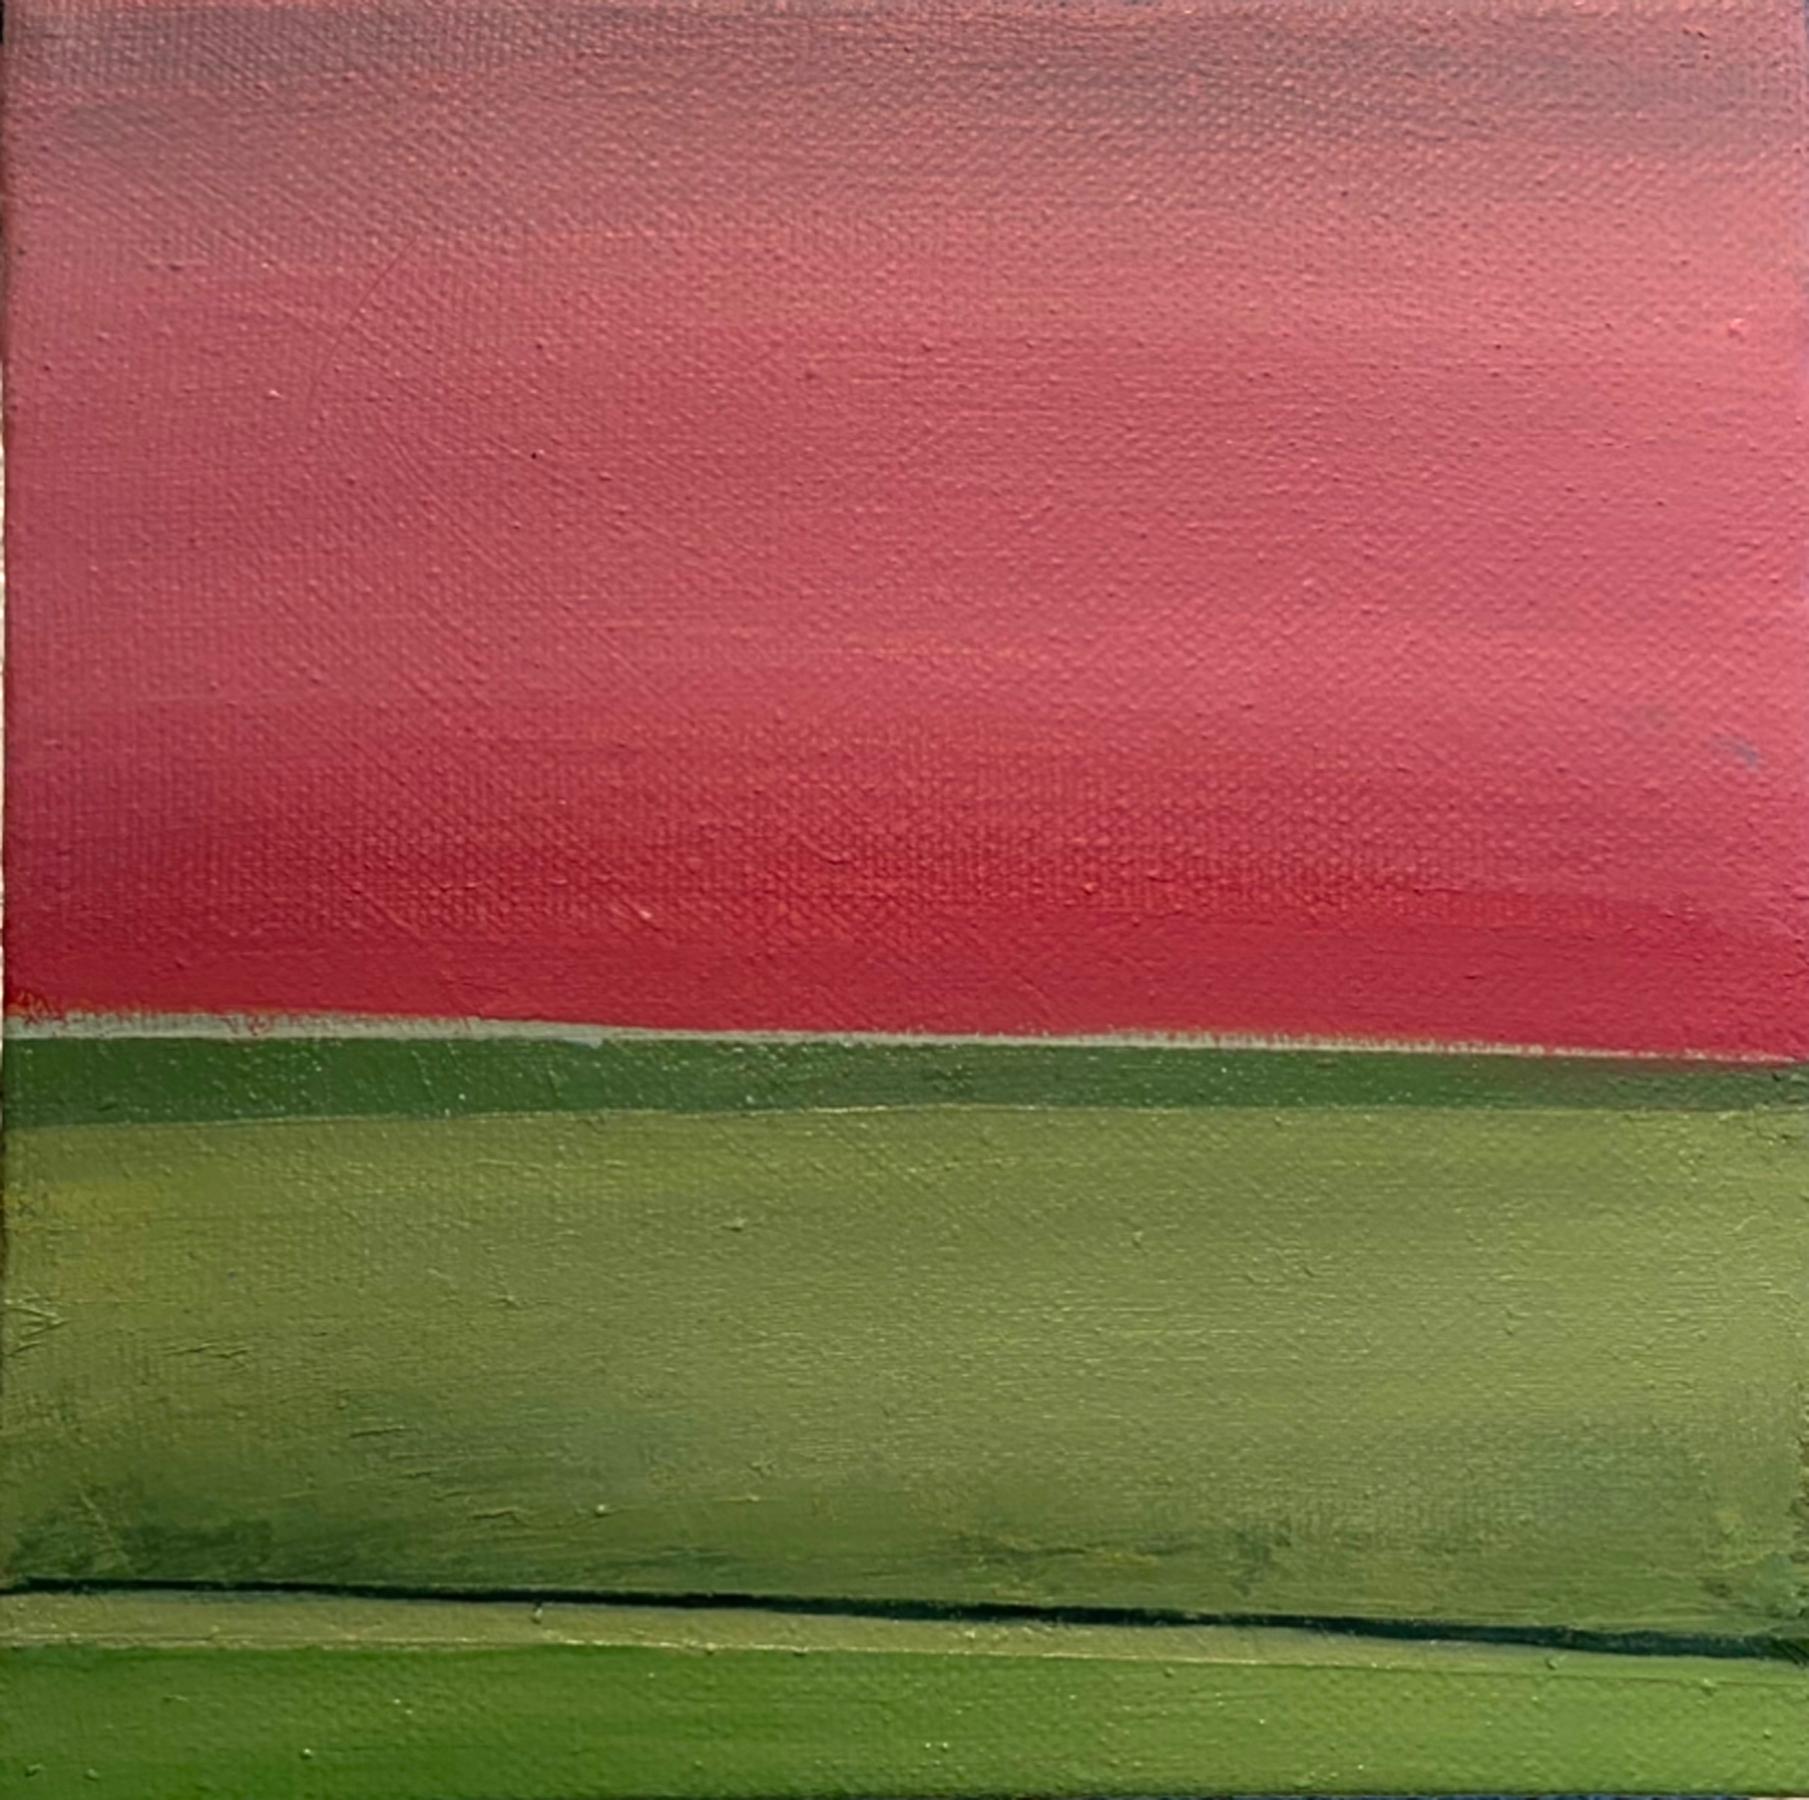 Alyson Kinkade Landscape Painting - Remembering Plains no. 54